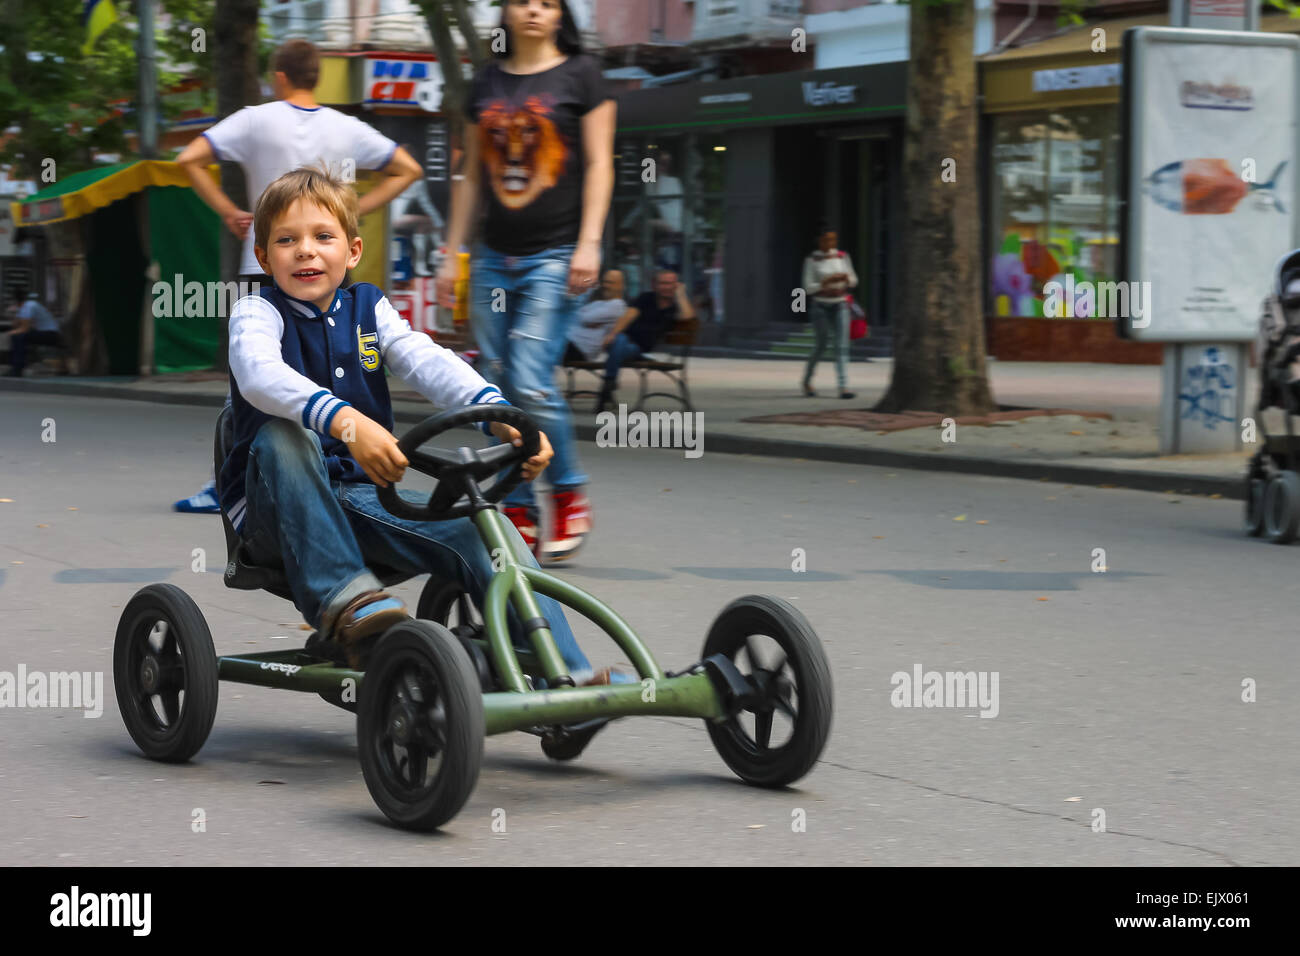 NIKOLAEV, UKRAINE - June 21, 2014: Kid in the play area riding a toy car Stock Photo